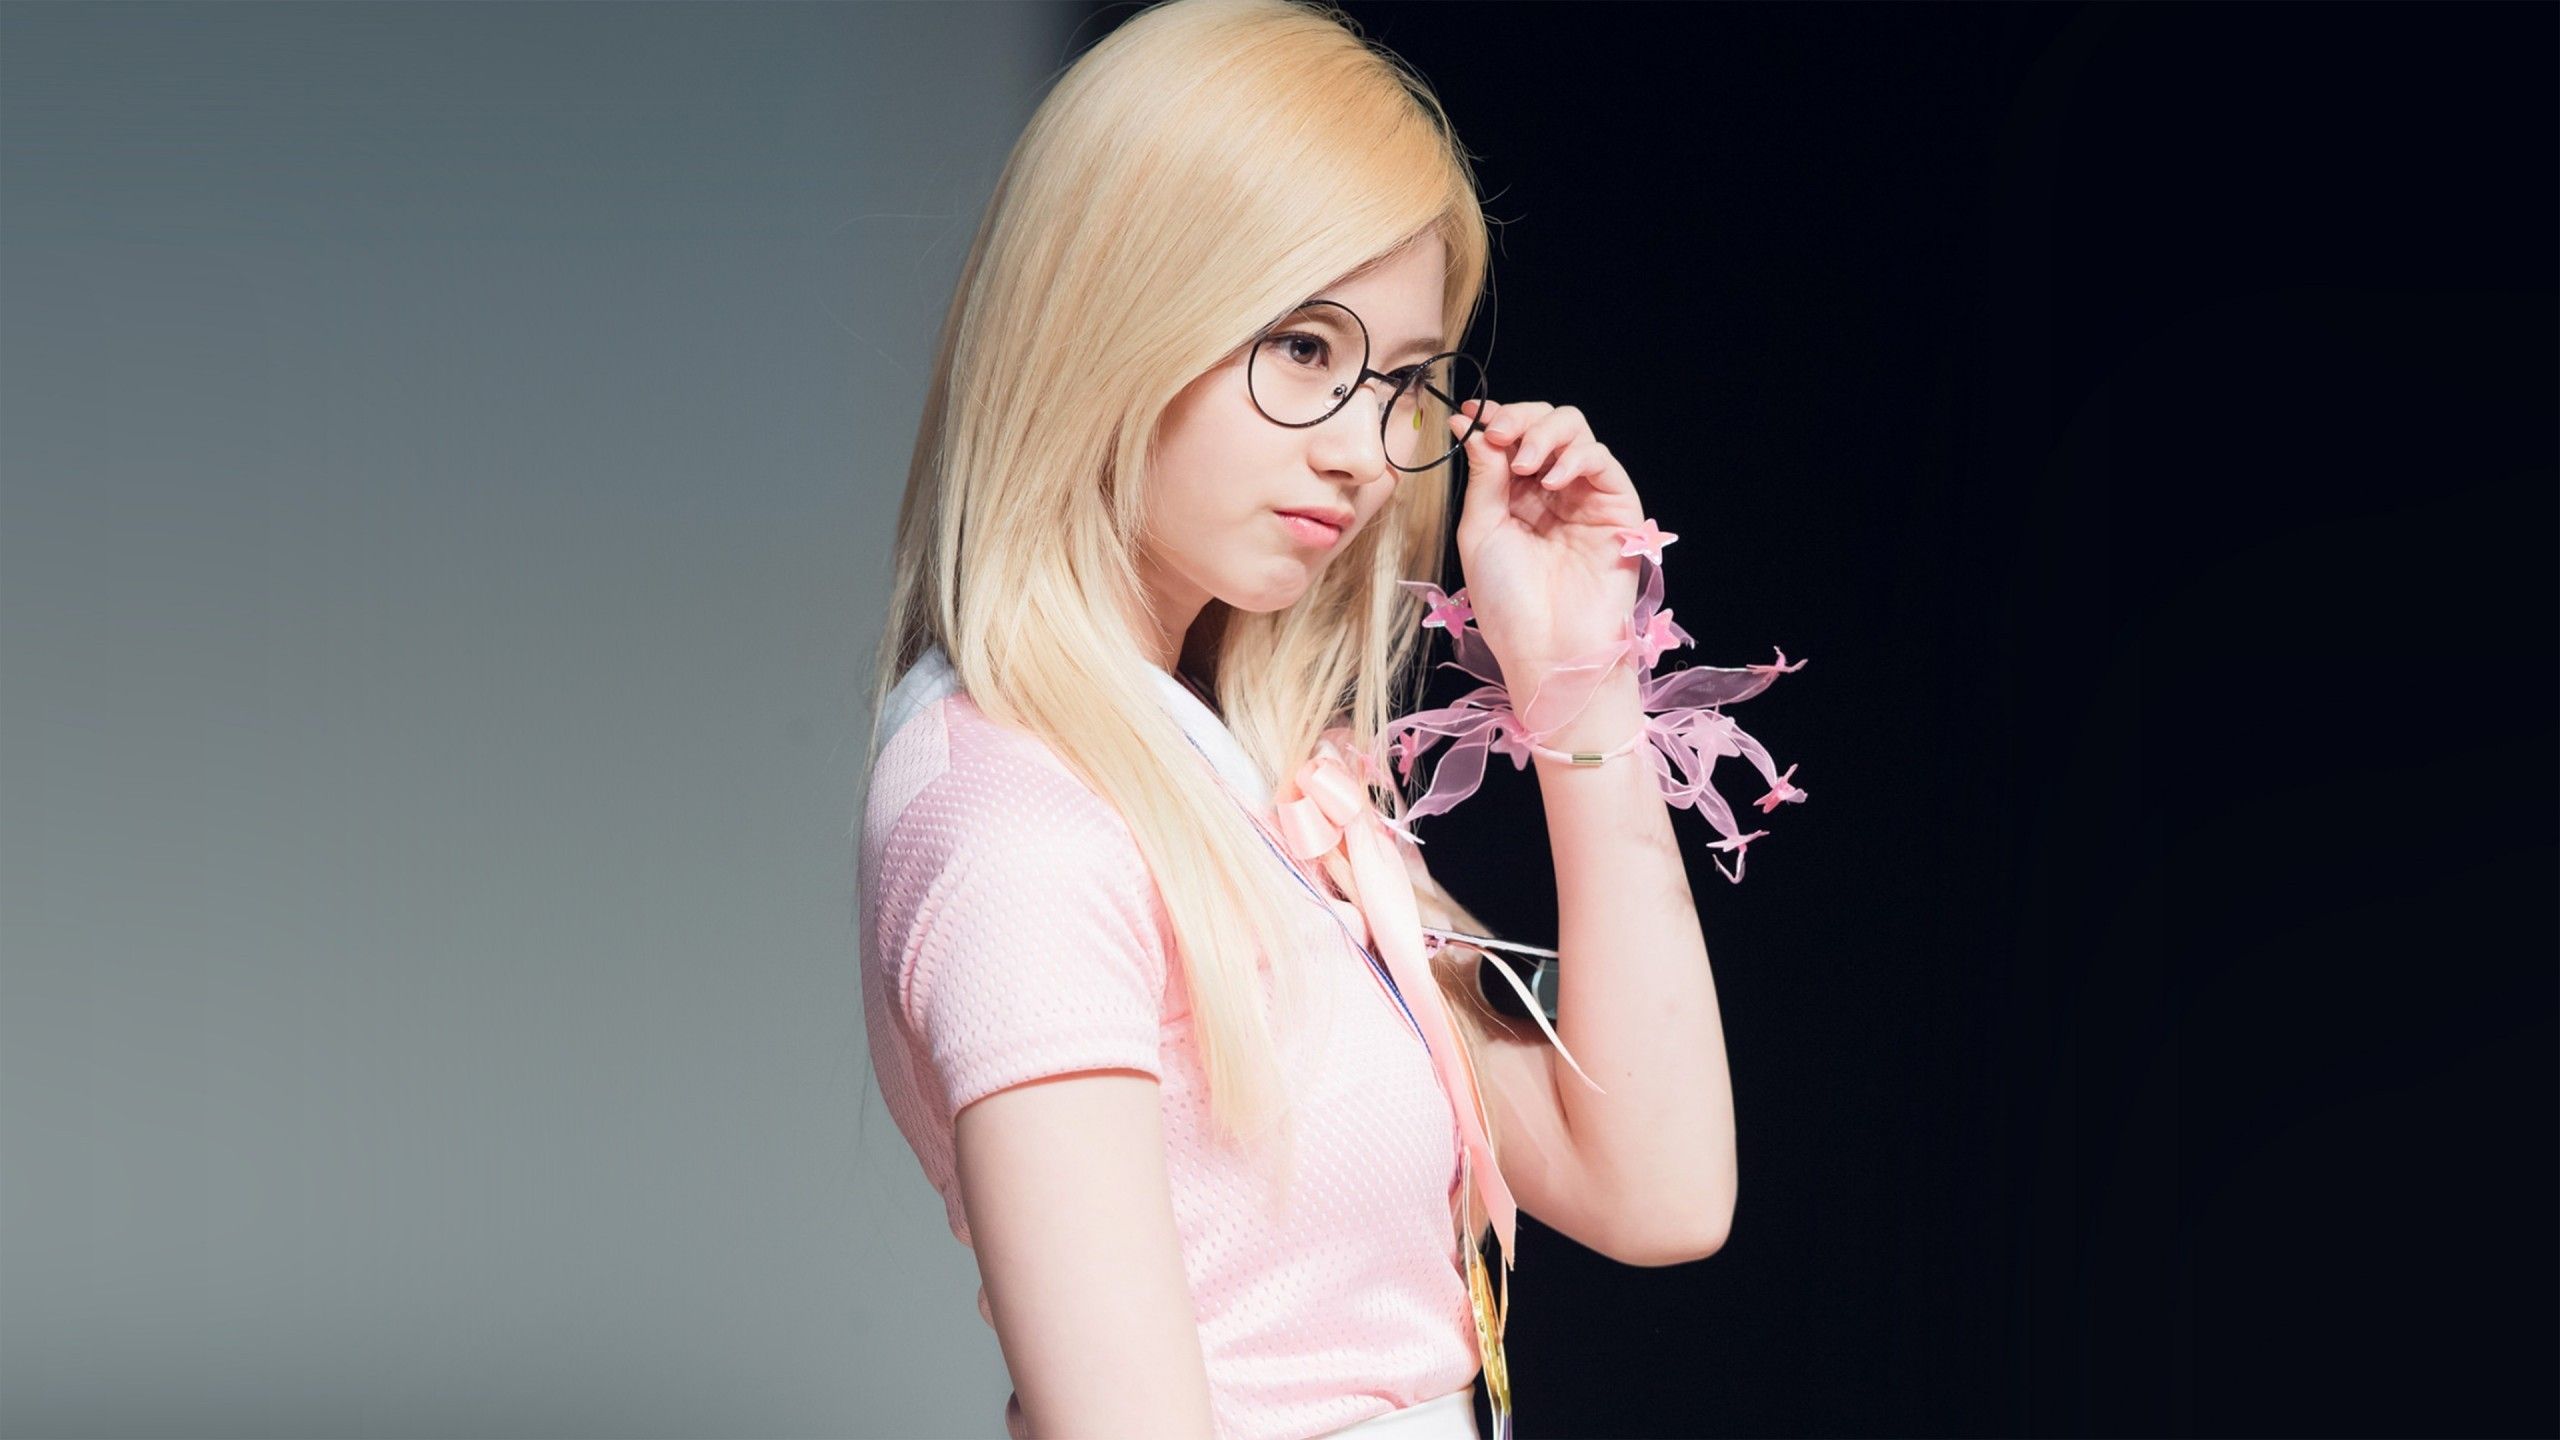 Download 2560x1440 Twice, Sana, Blonde, Glasses, South Korean Girl Wallpaper for iMac 27 inch